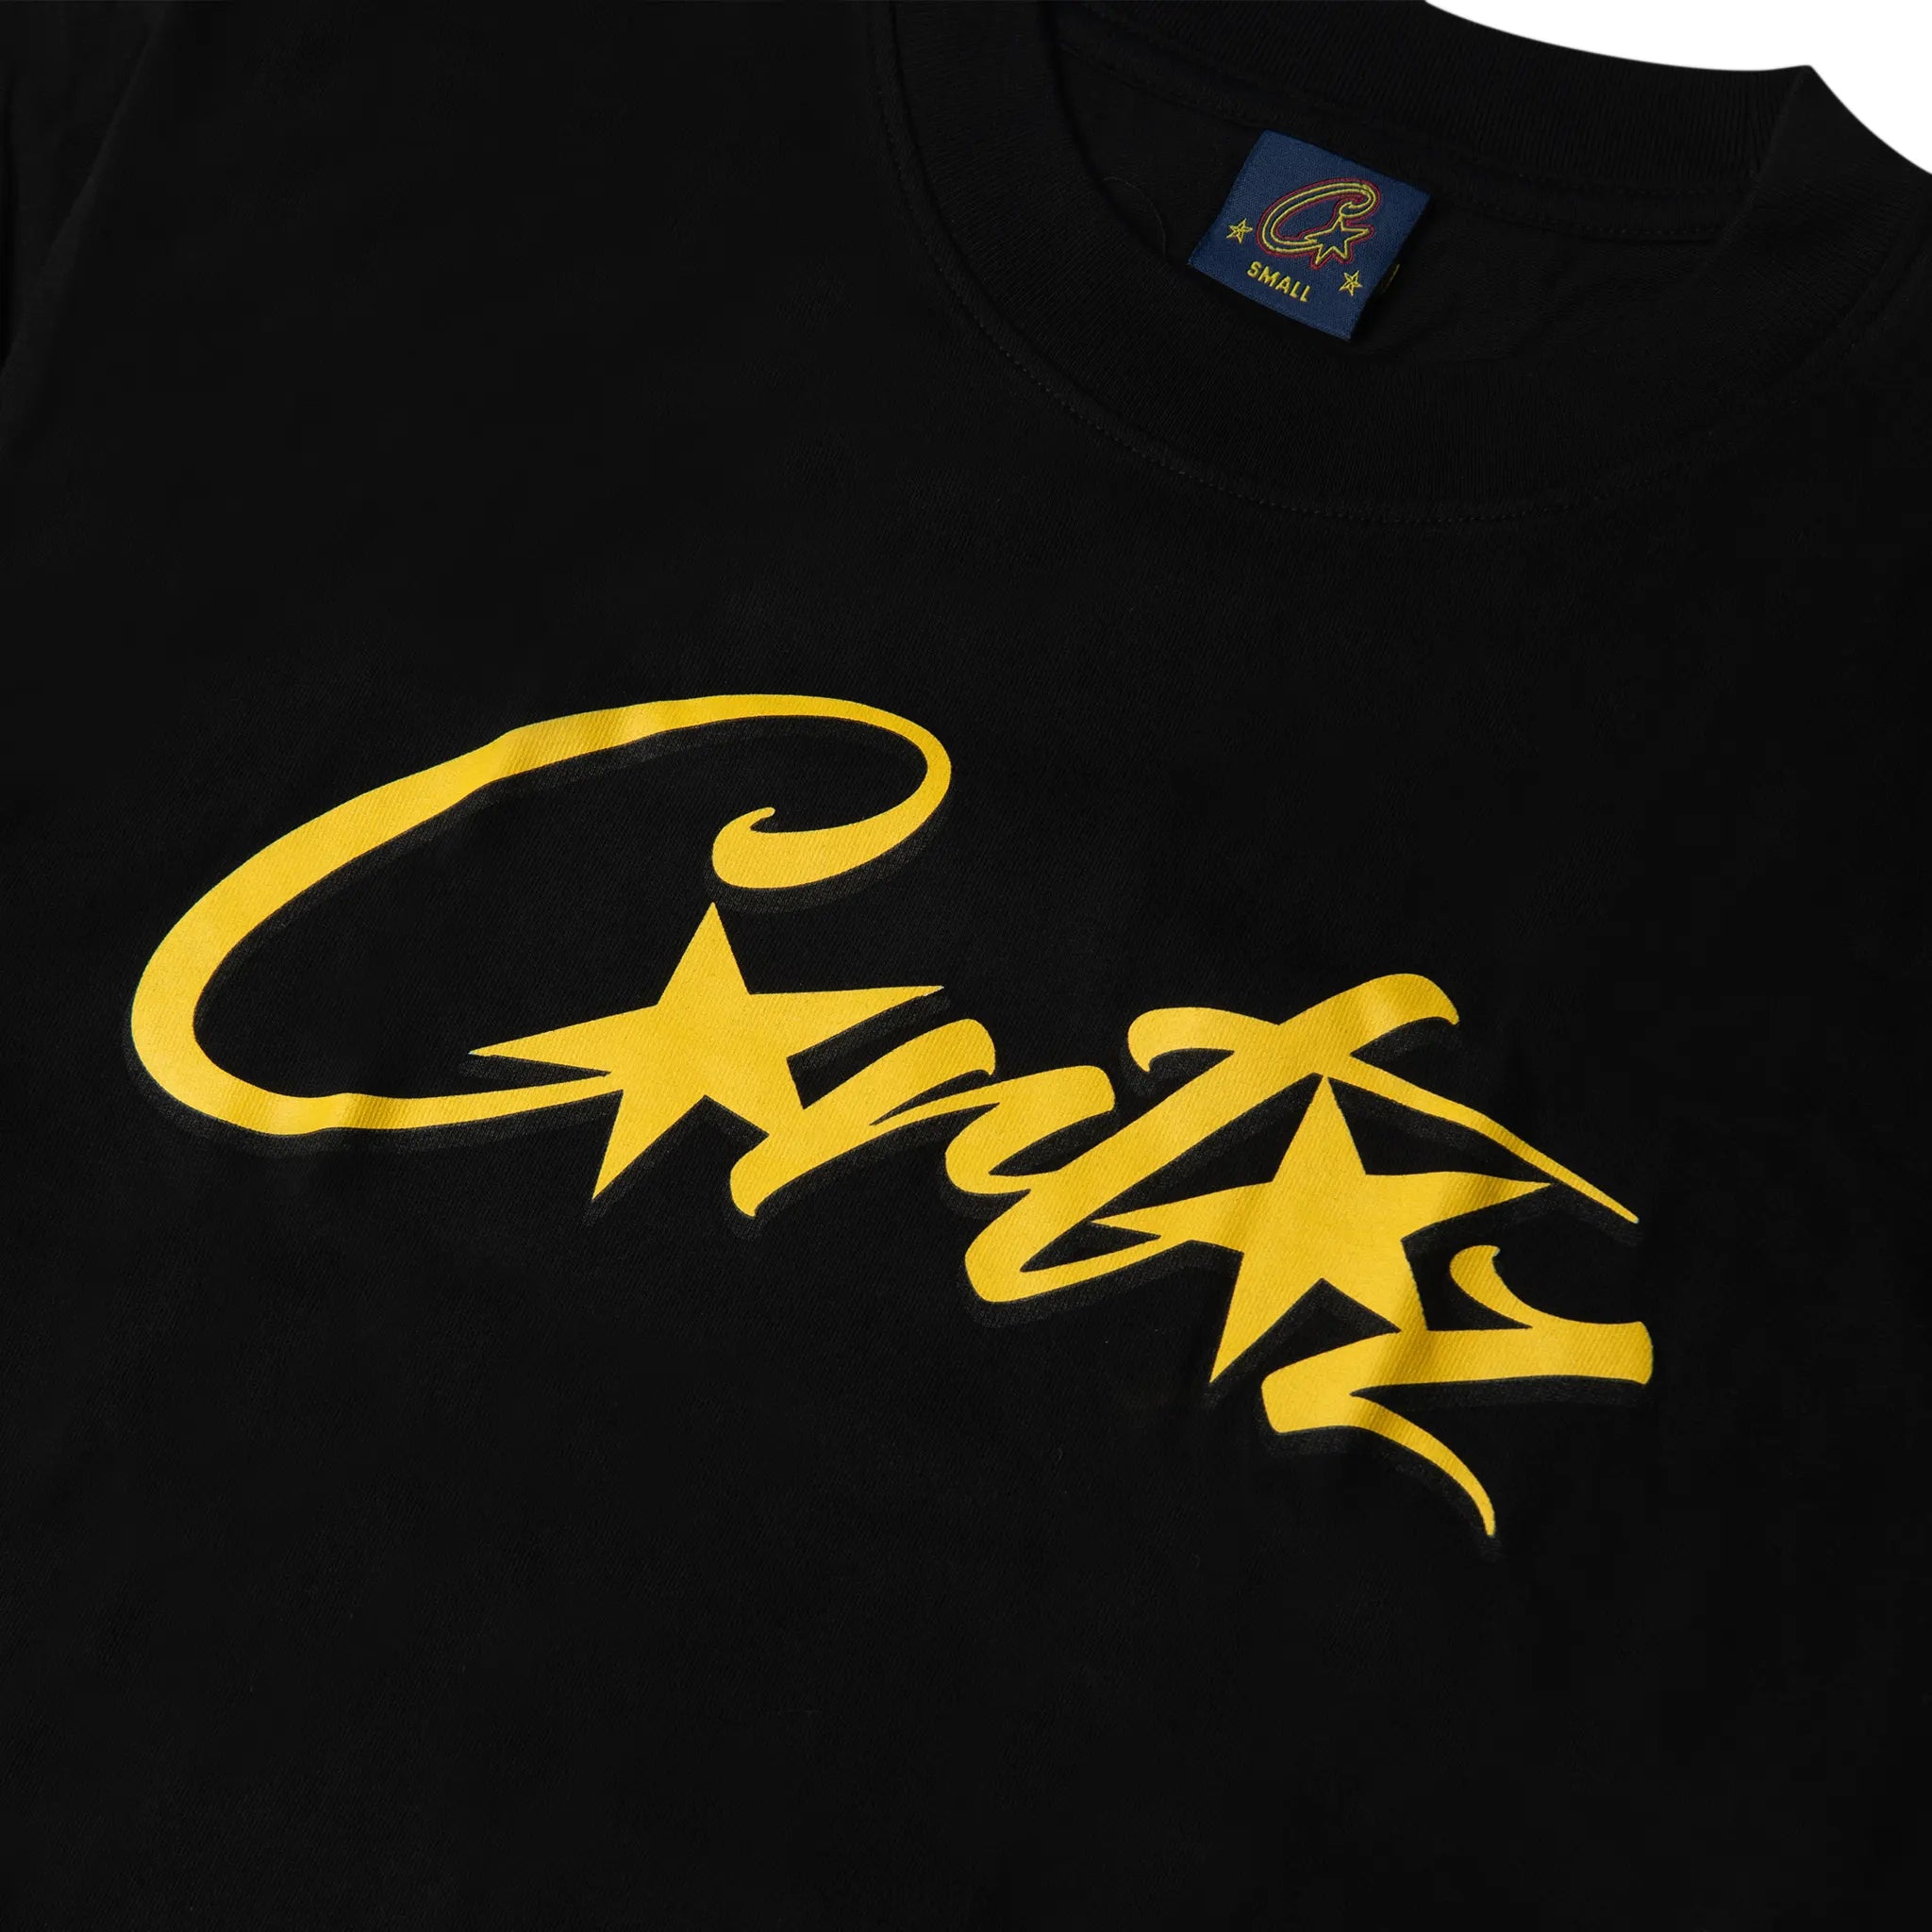 Detail view of Corteiz Allstarz Black Yellow T Shirt